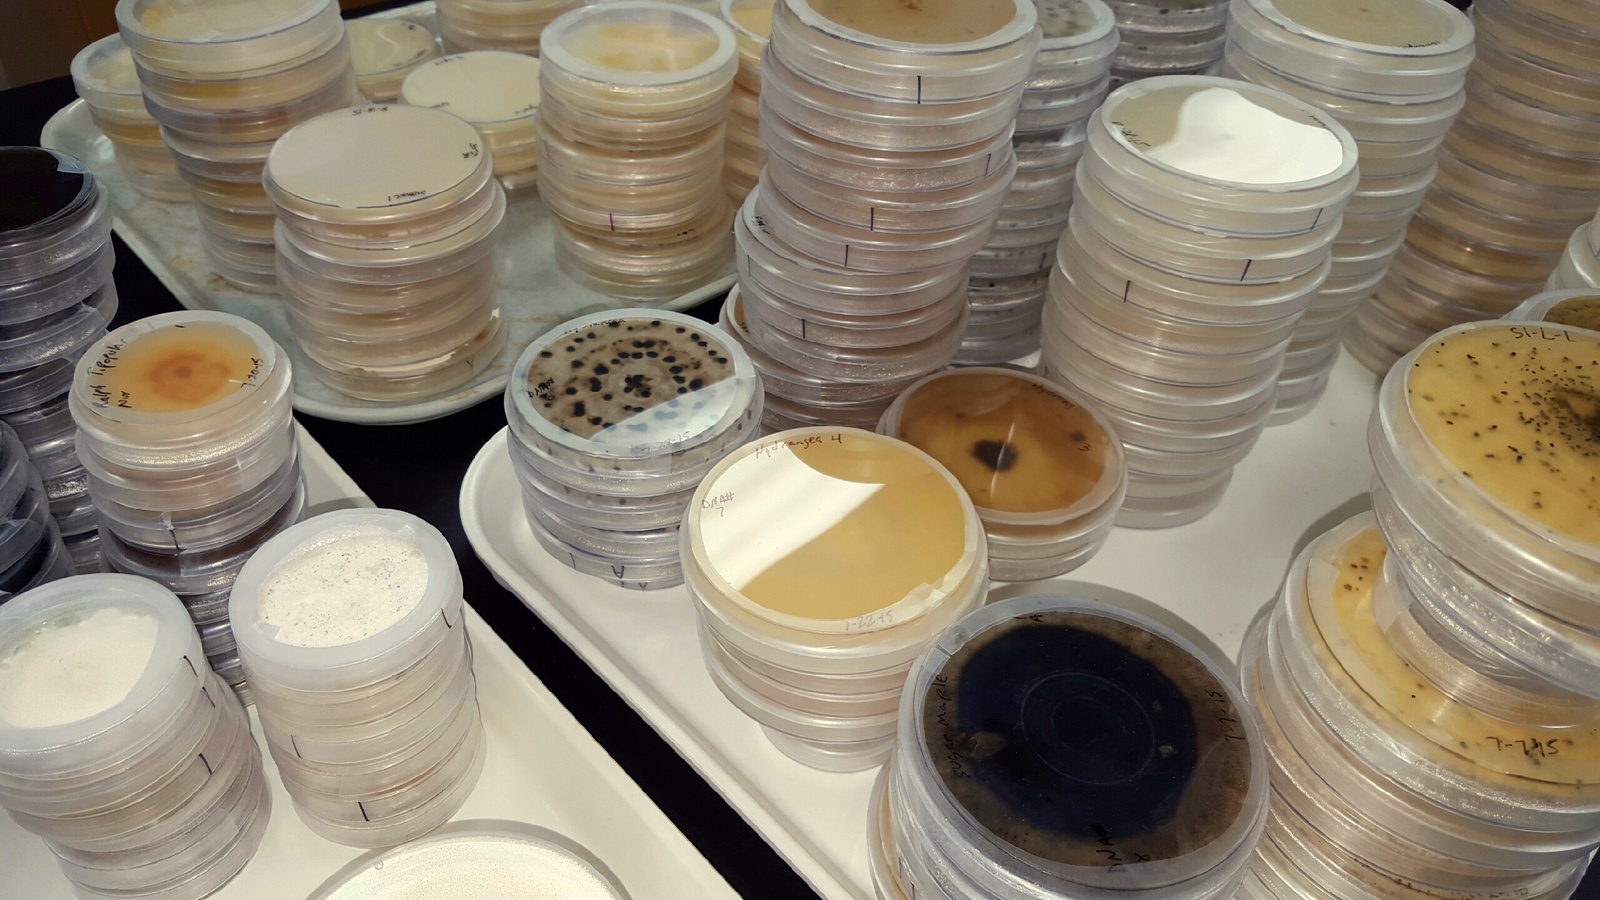 Petri Plates